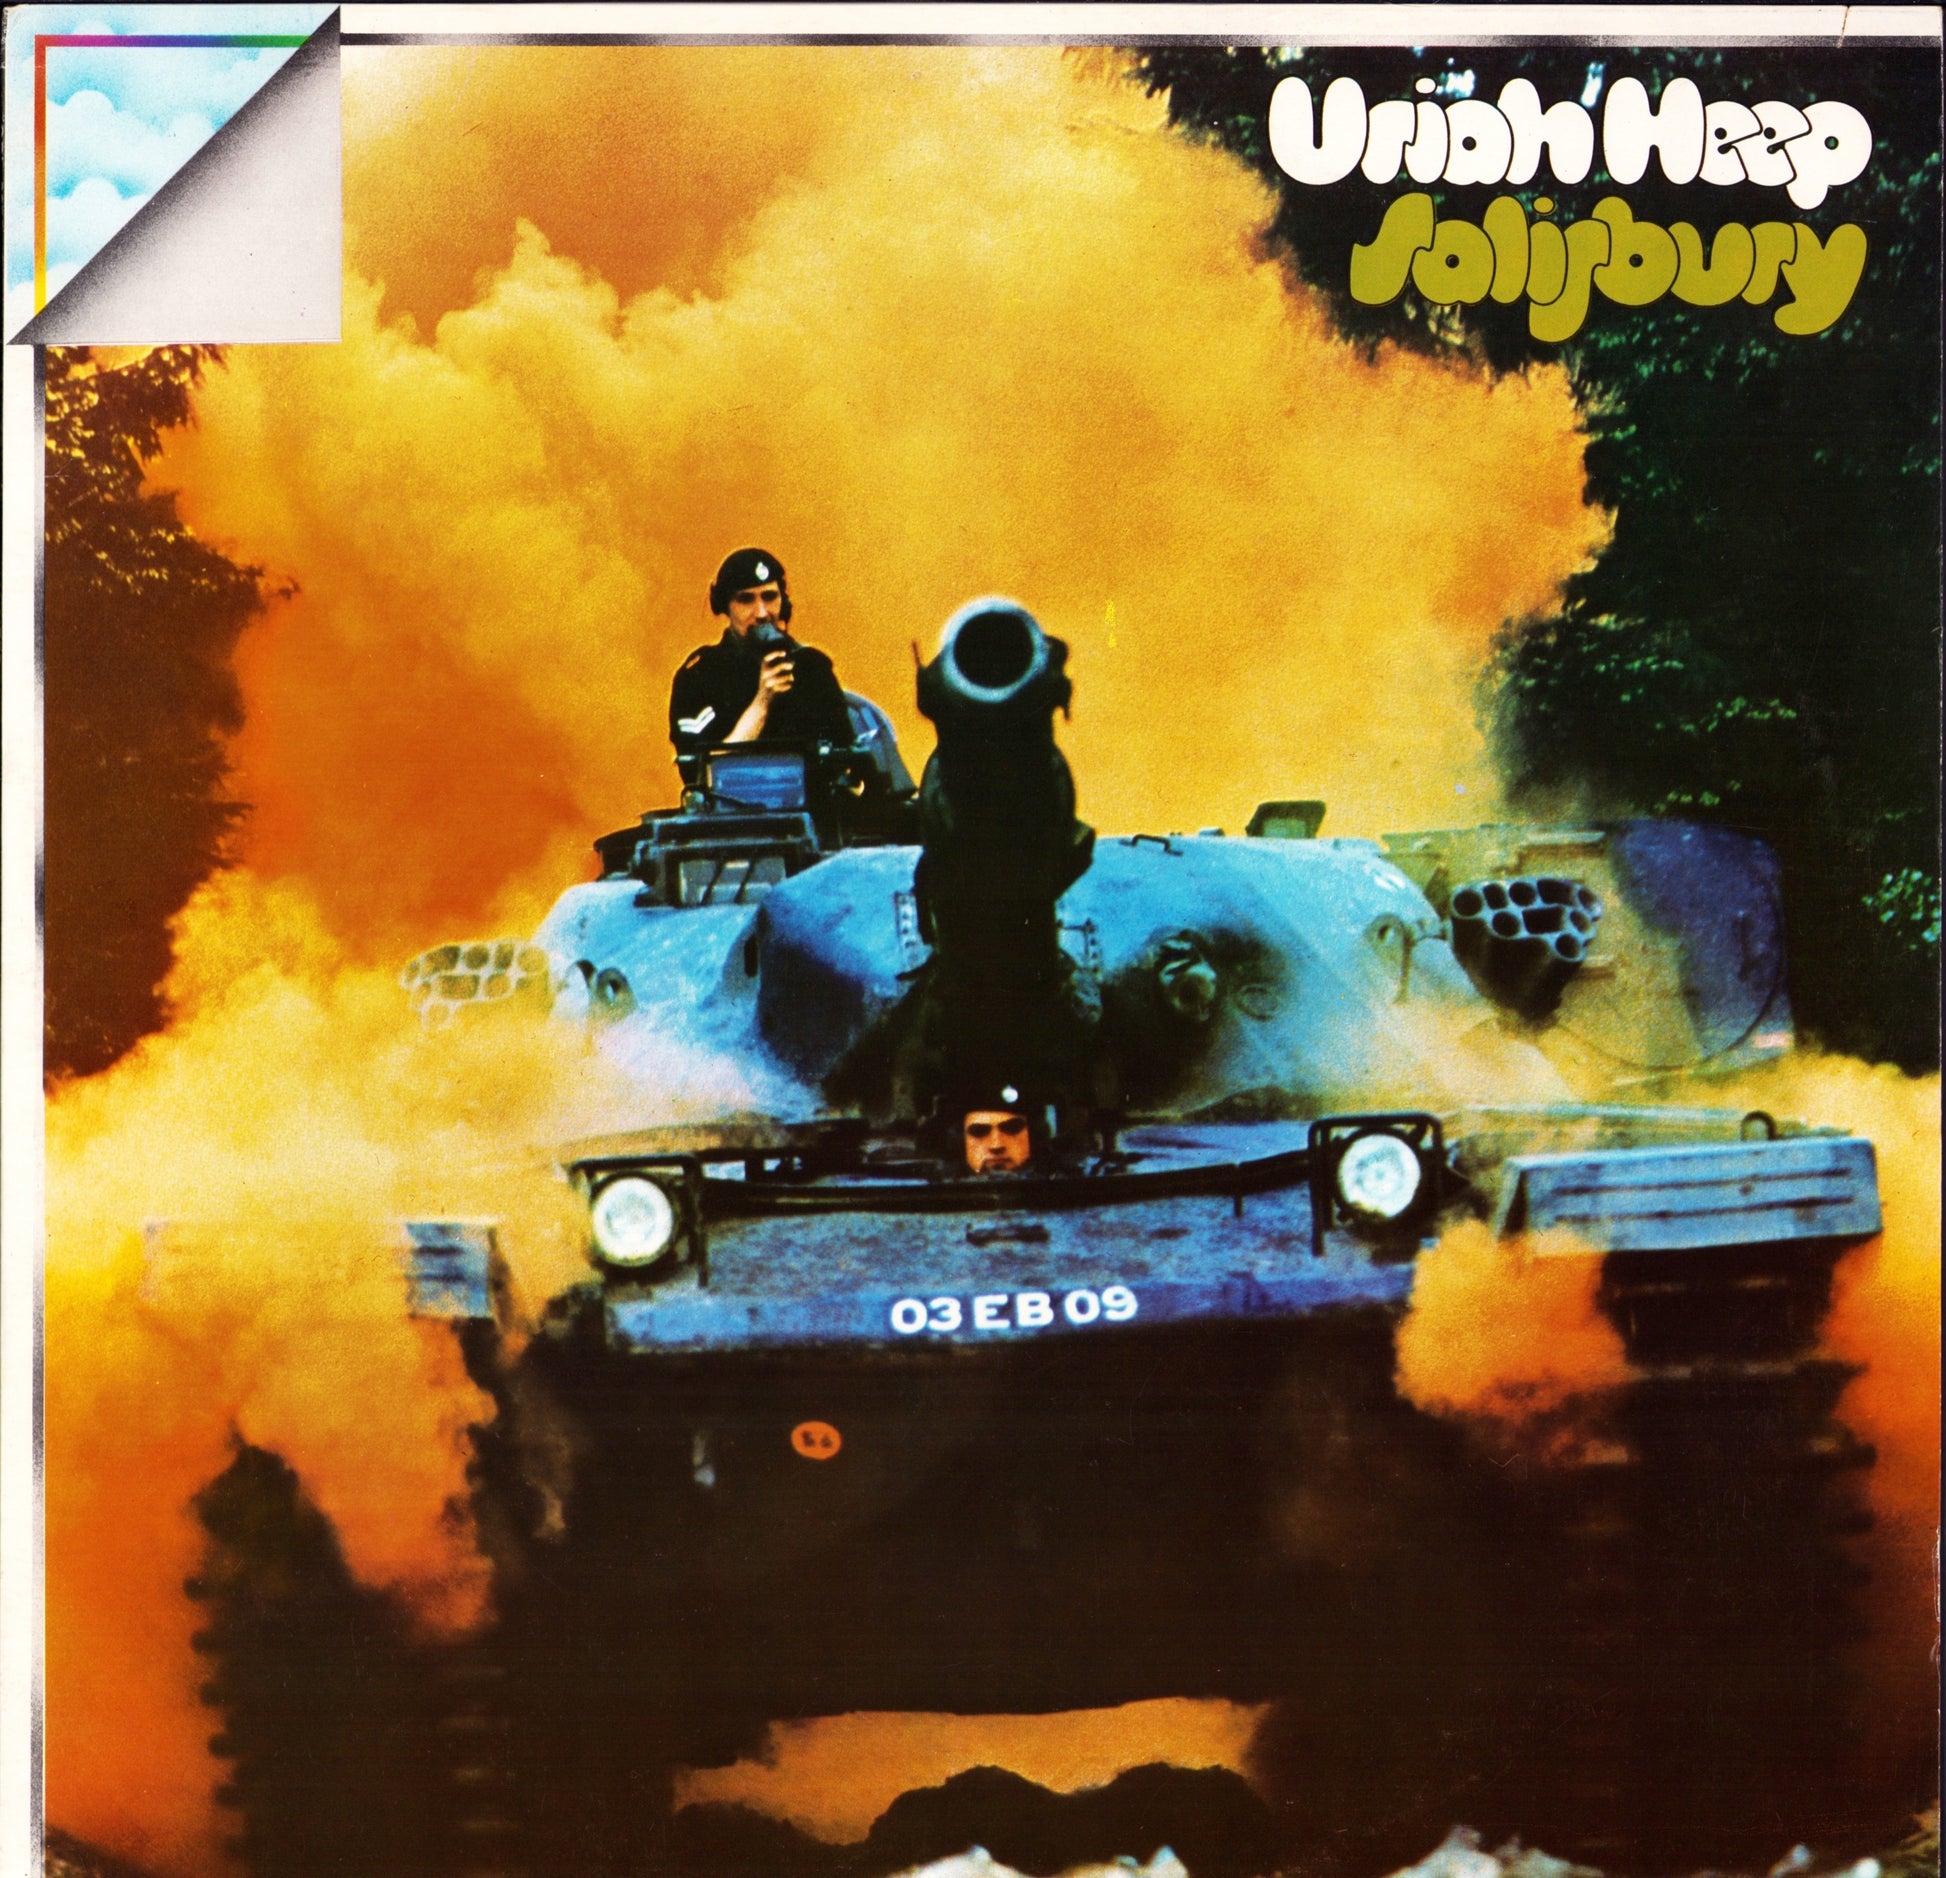 Uriah Heep ‎- Salisbury Vinyl LP IT